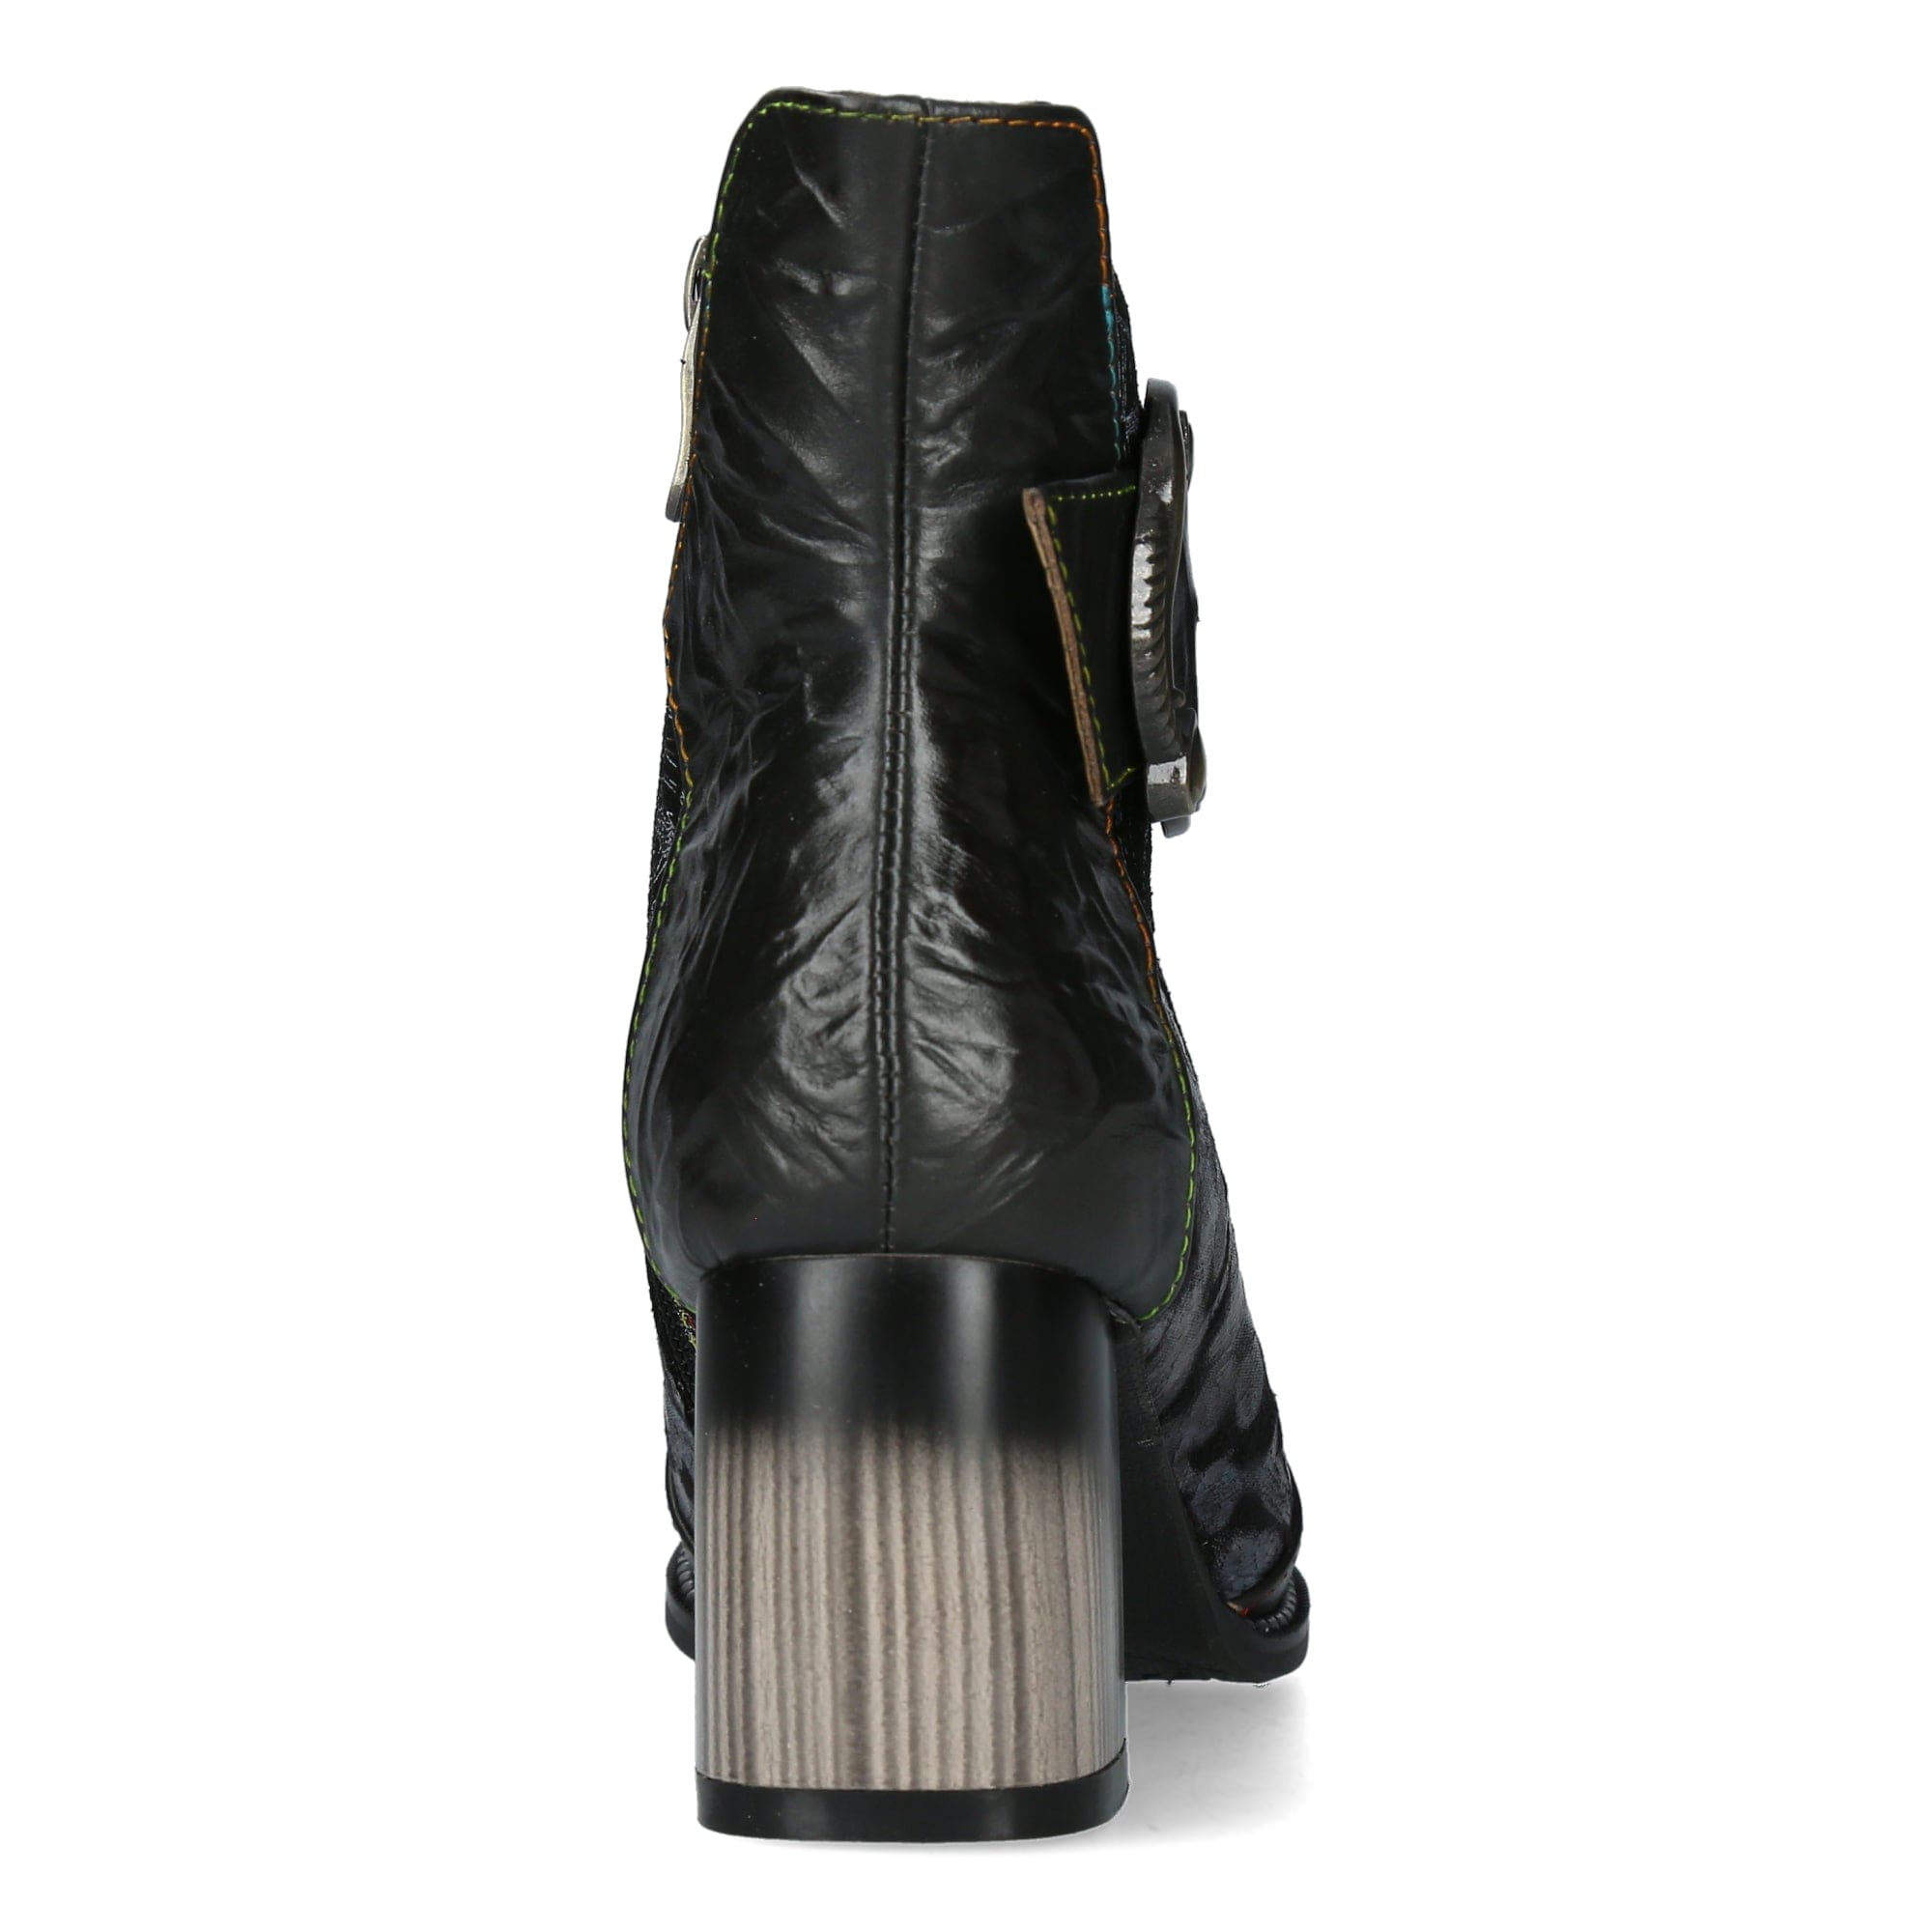 Chaussure IDCORAO 01 - Boots